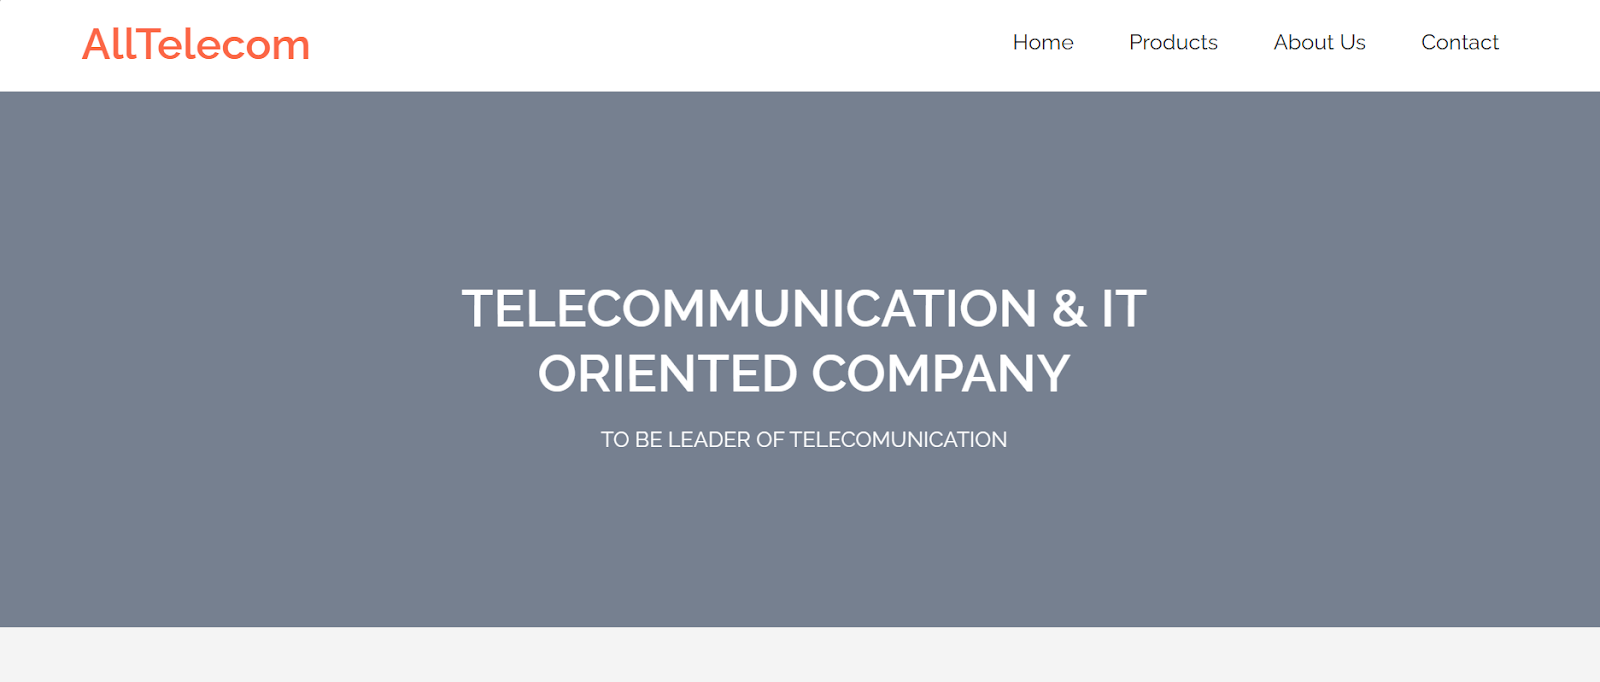 AllTelecom website snapshot highlighting the services it offers.